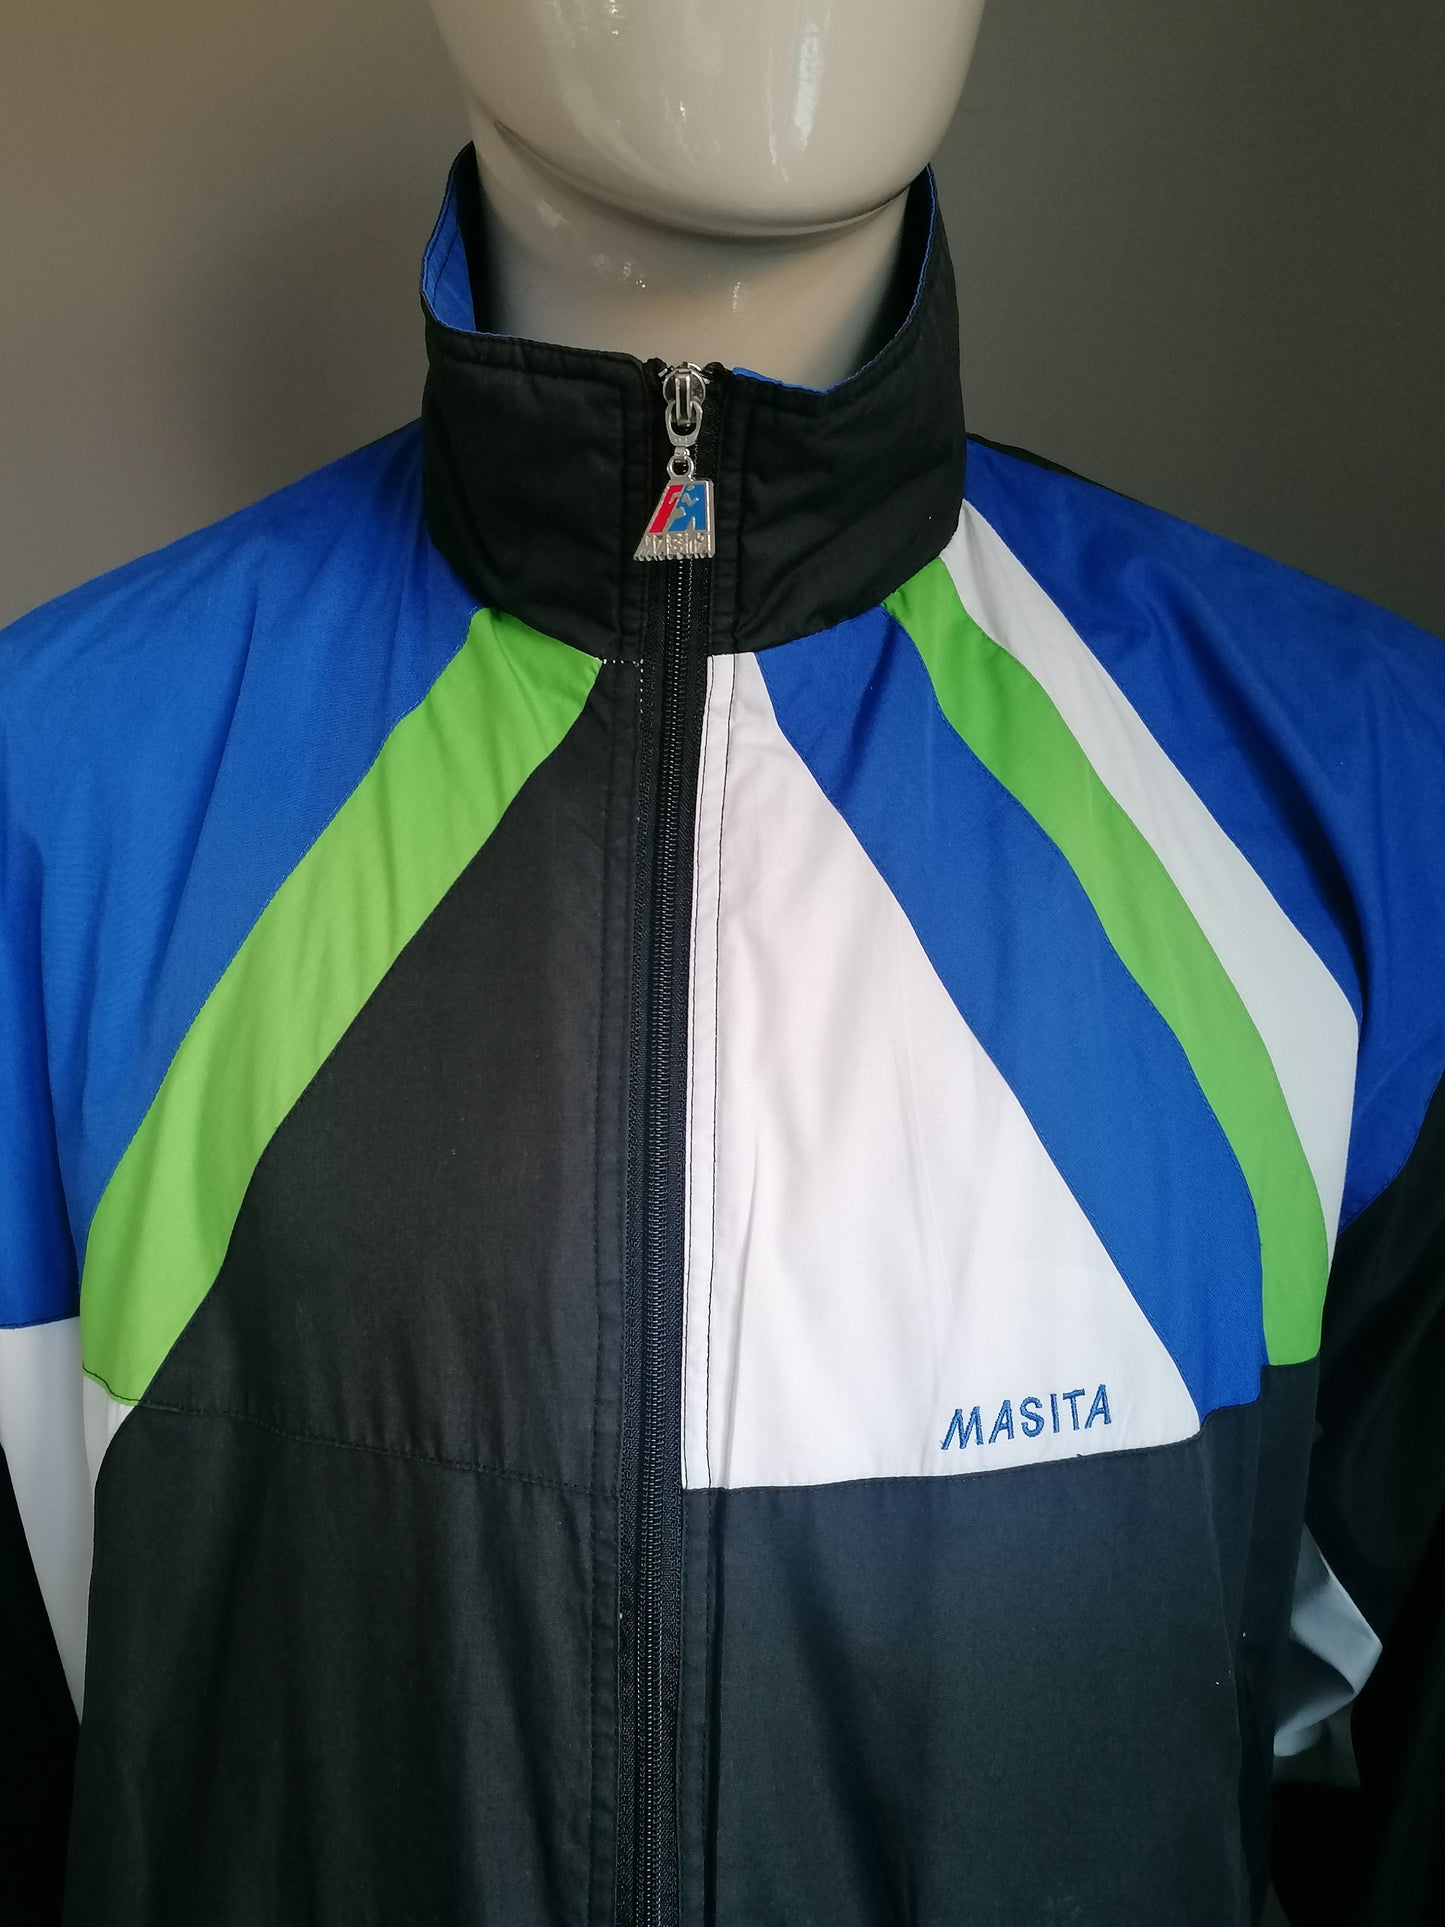 Vintage Masita Original 80's-90's trainingsjack. Blauw Wit Groen Zwart gekleurd. Maat L >> XL.